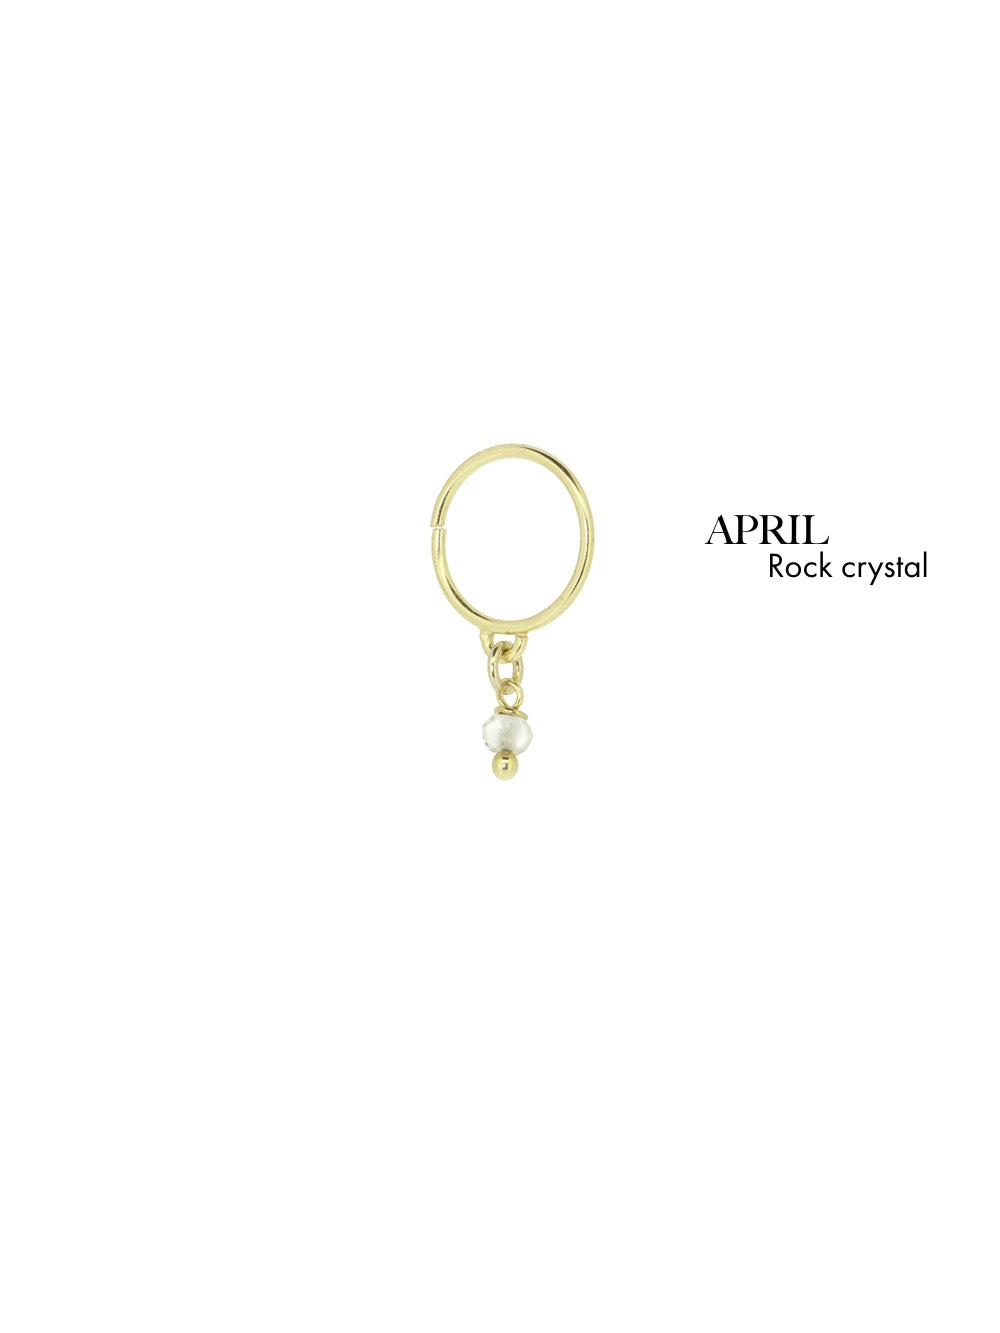 Bestie Birthstone April - Rock Crystal | 14K Gold Plated